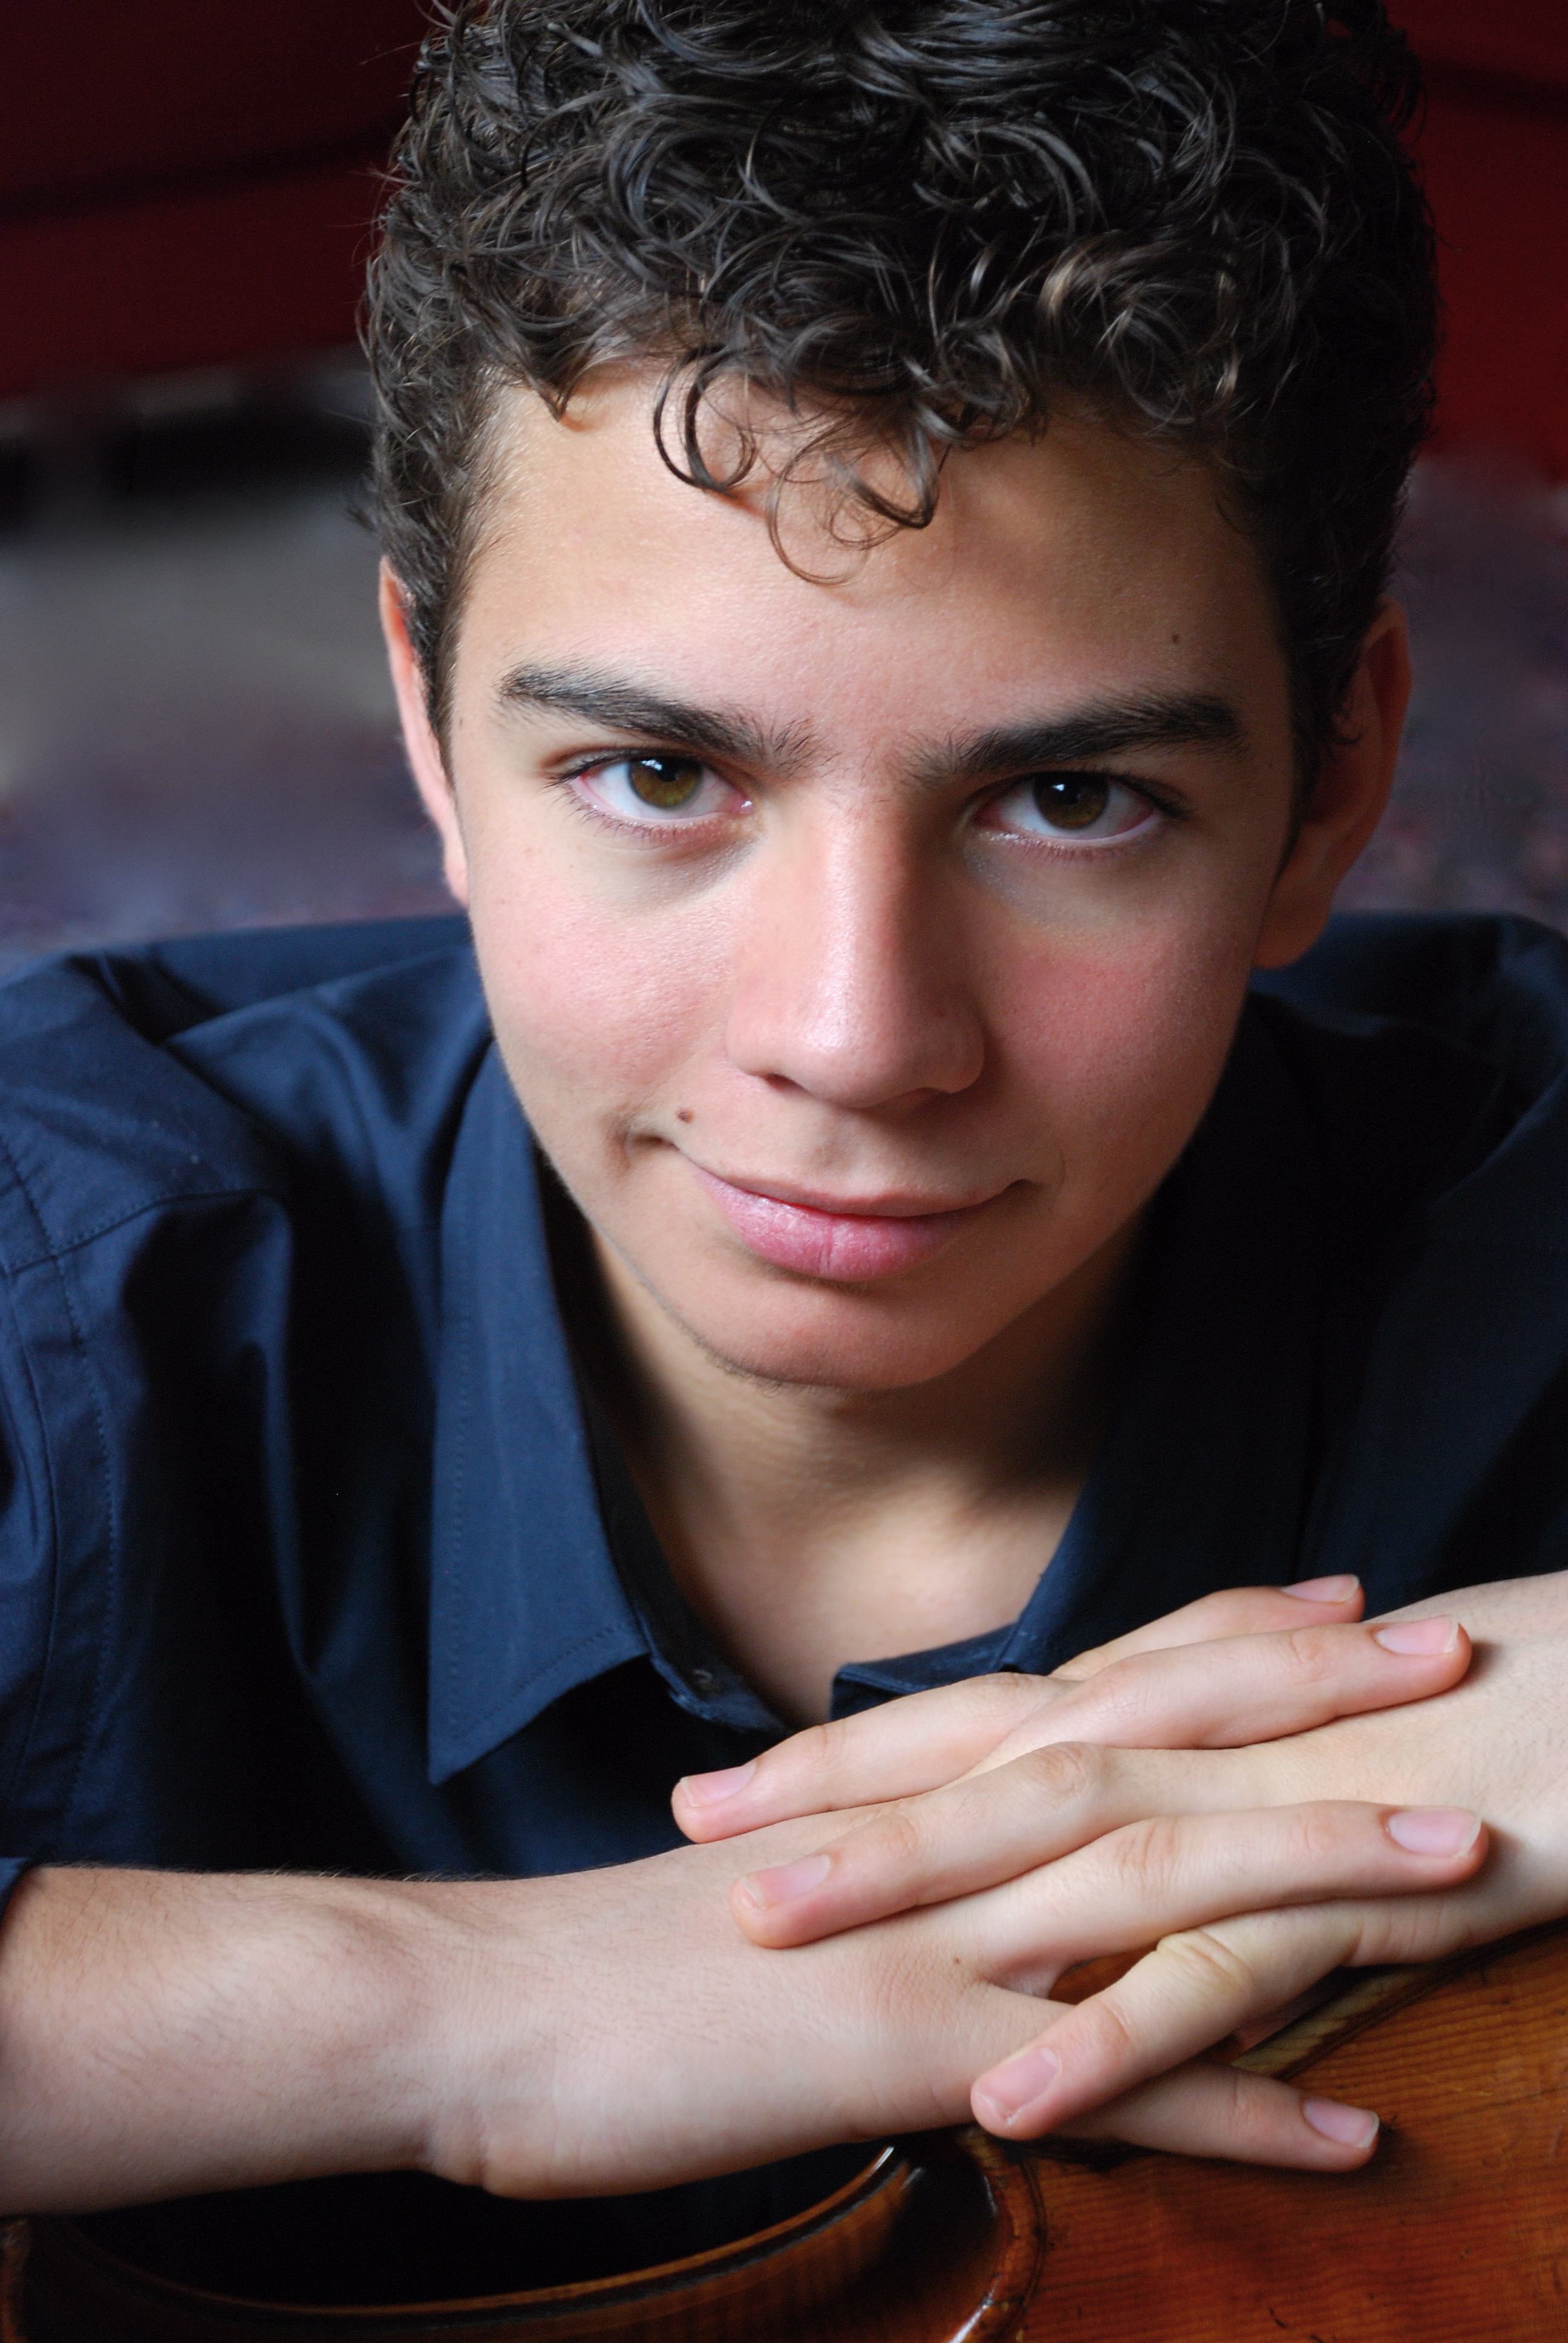 Juan-Salvador Carrasco (cellist, 14-years old, January 2009)